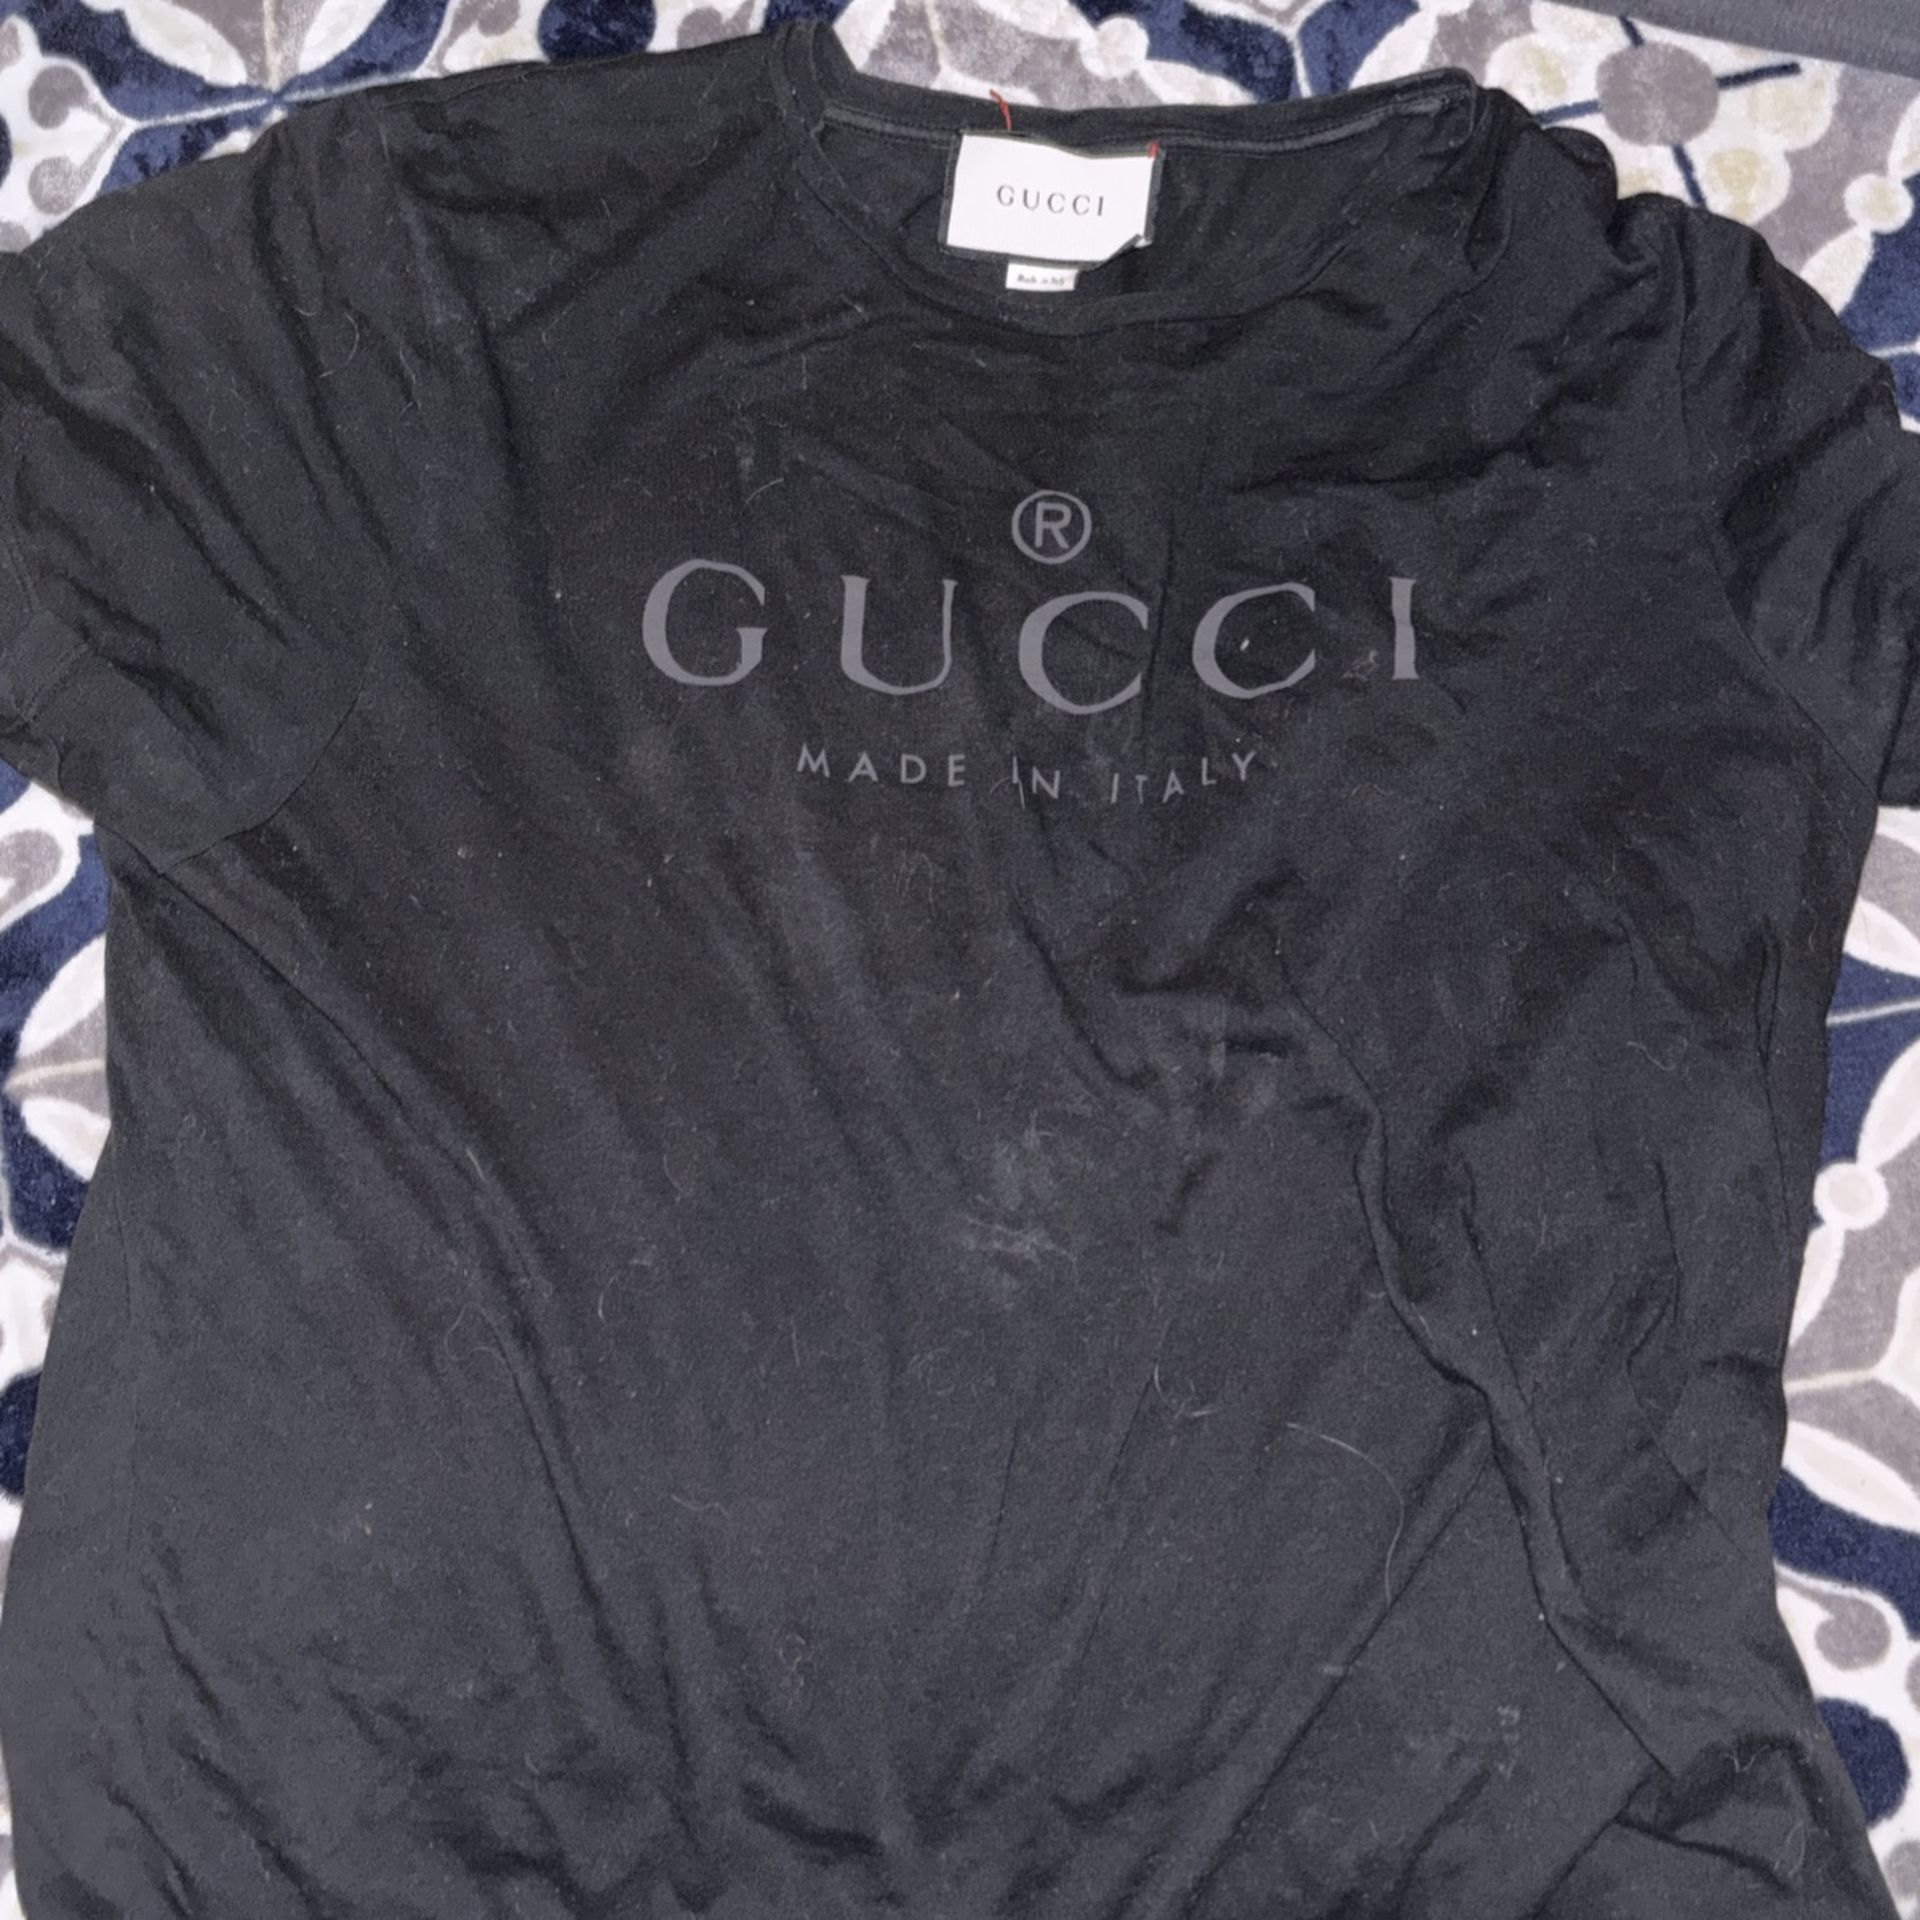 Gucci Shirt Size Medium 